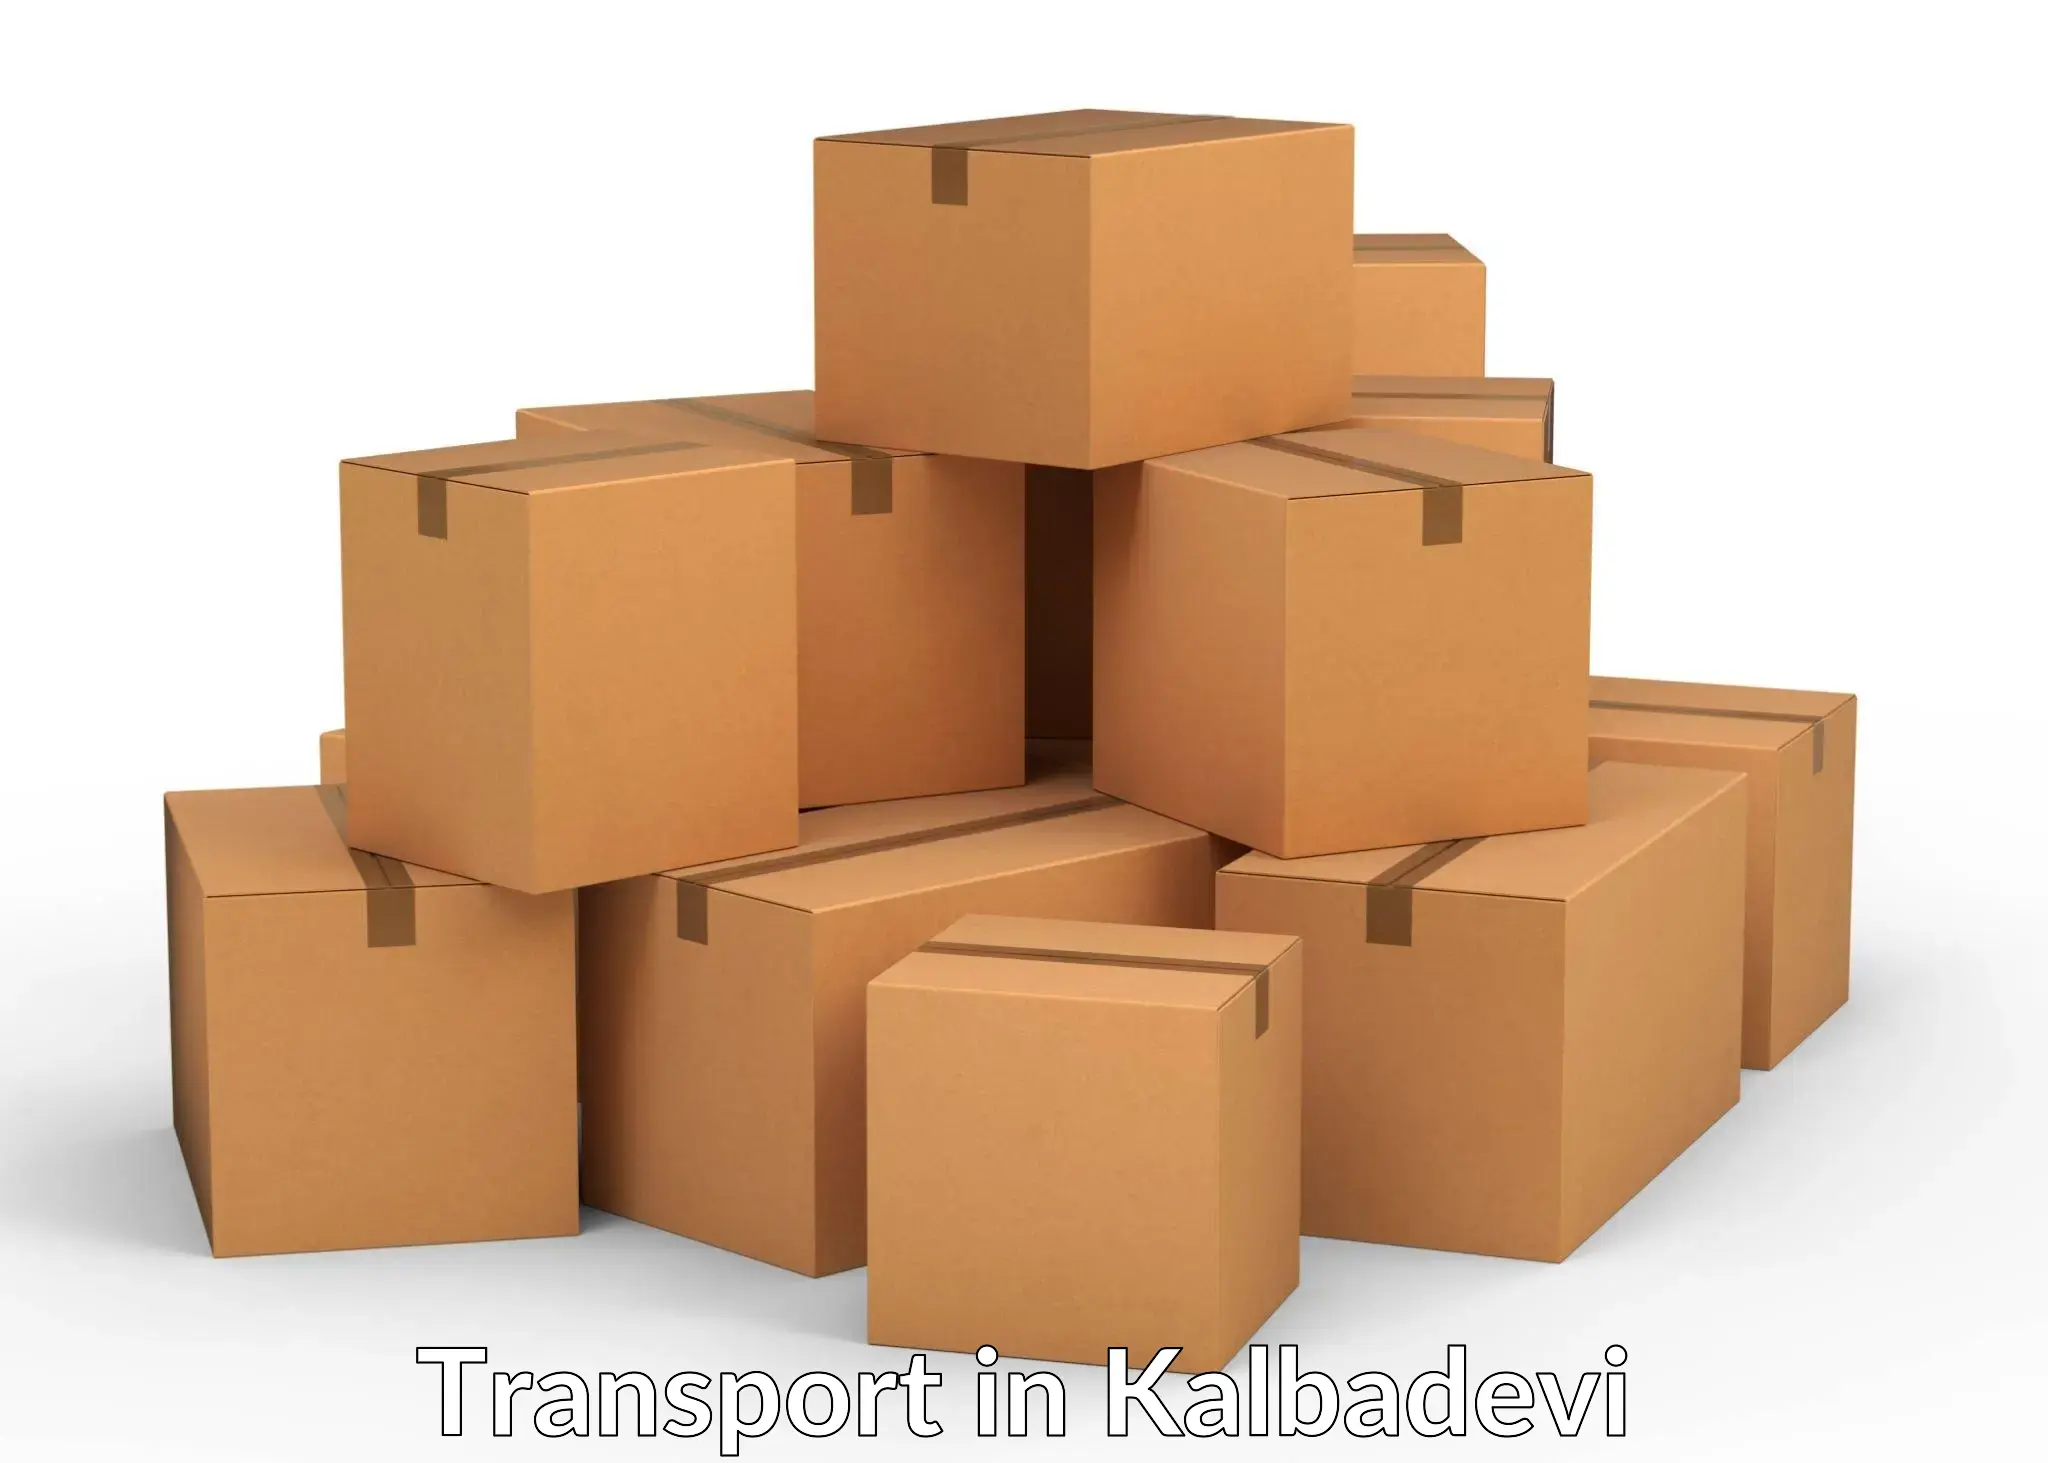 Online transport in Kalbadevi